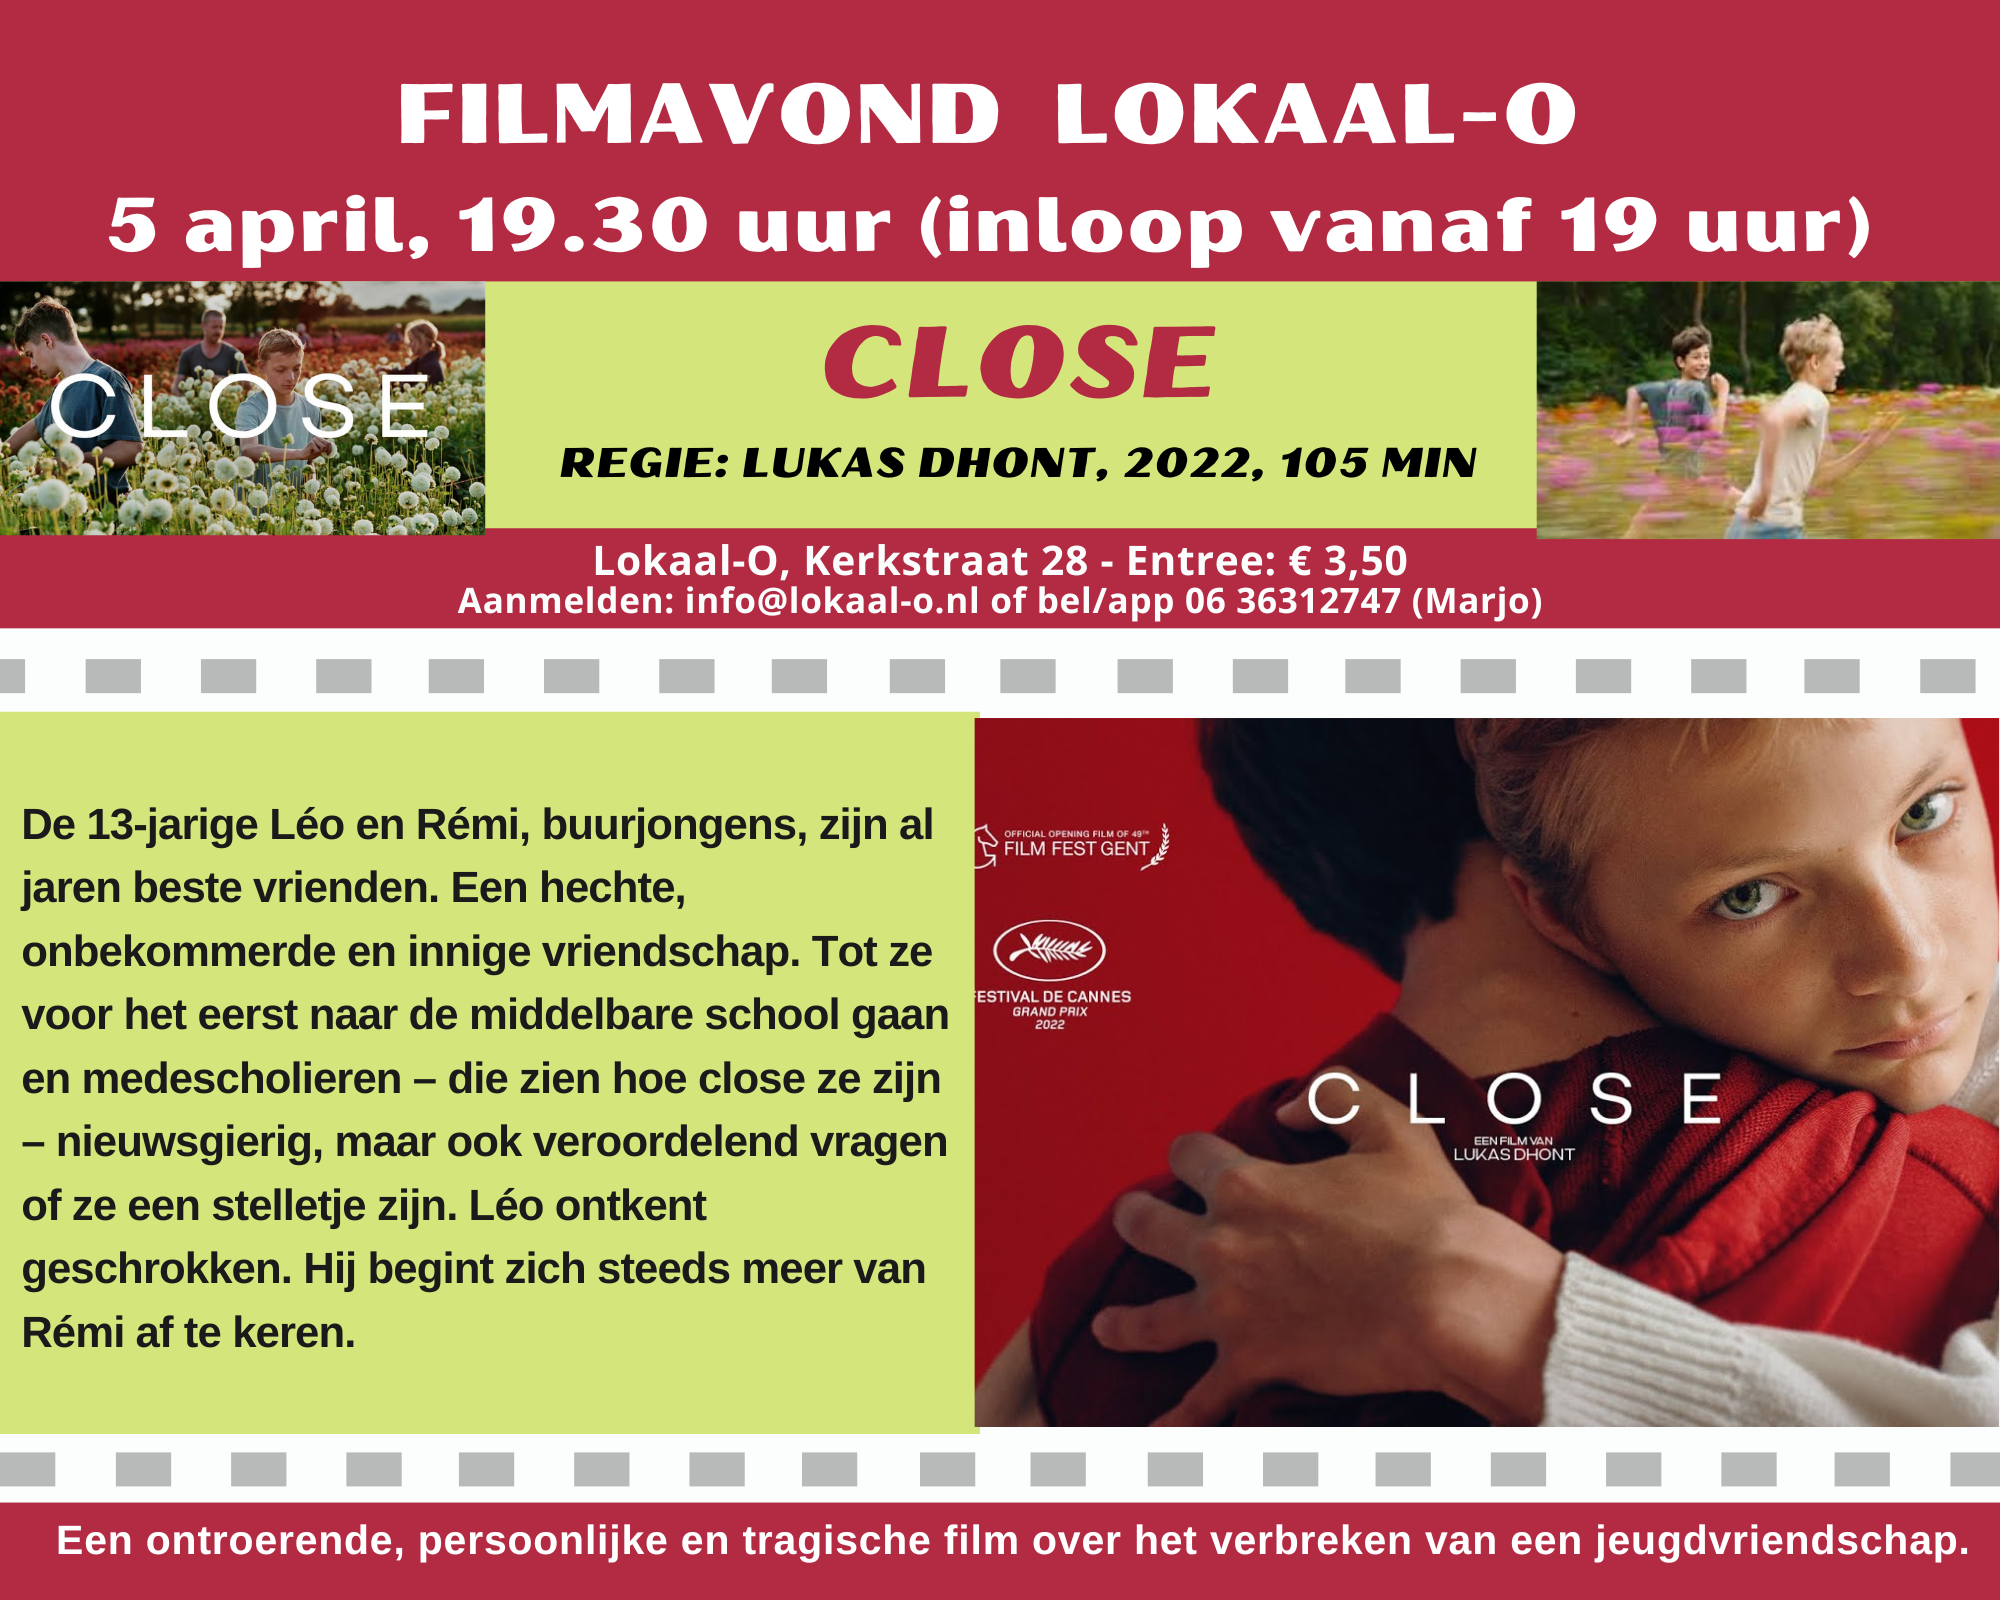 Je bekijkt nu Filmavond in Lokaal-O, woensdag 5 april: “Close”